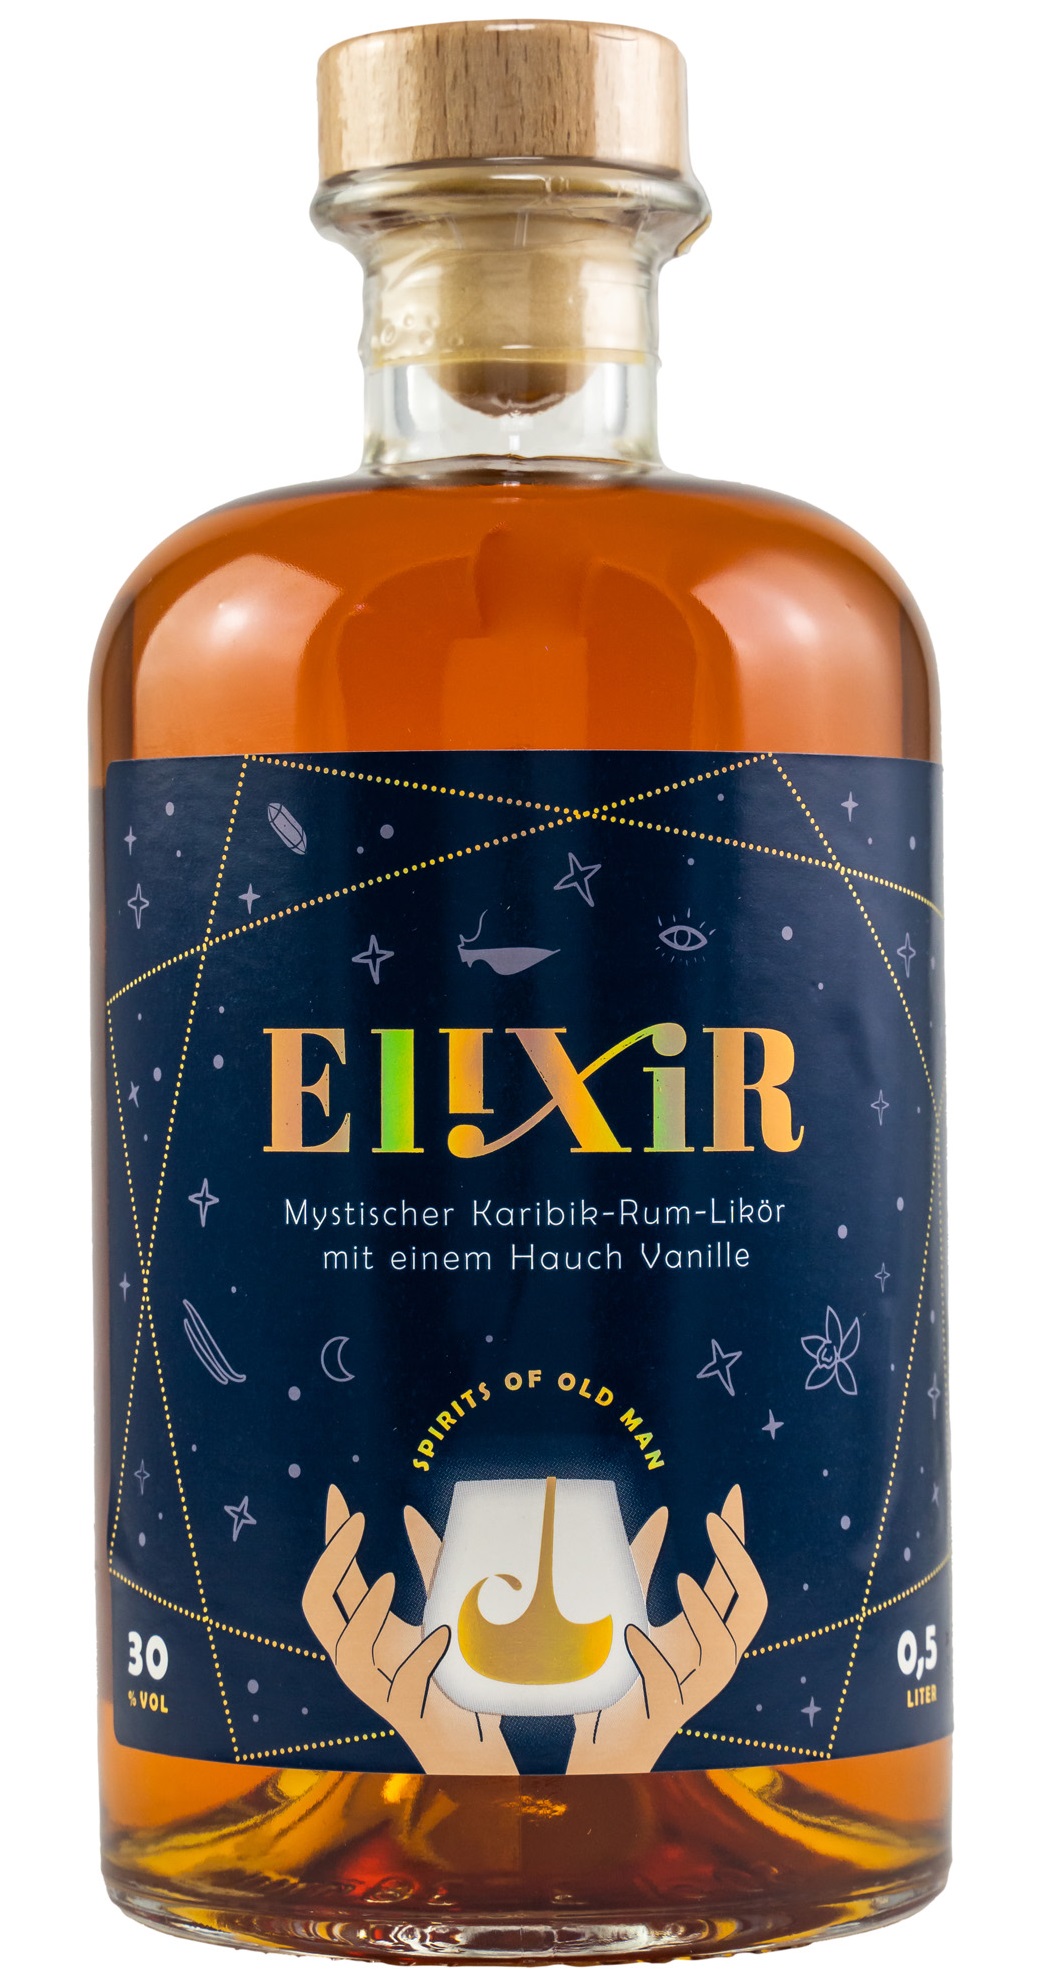 Old Man Elixir Rum Likör 30.0% 0,5l